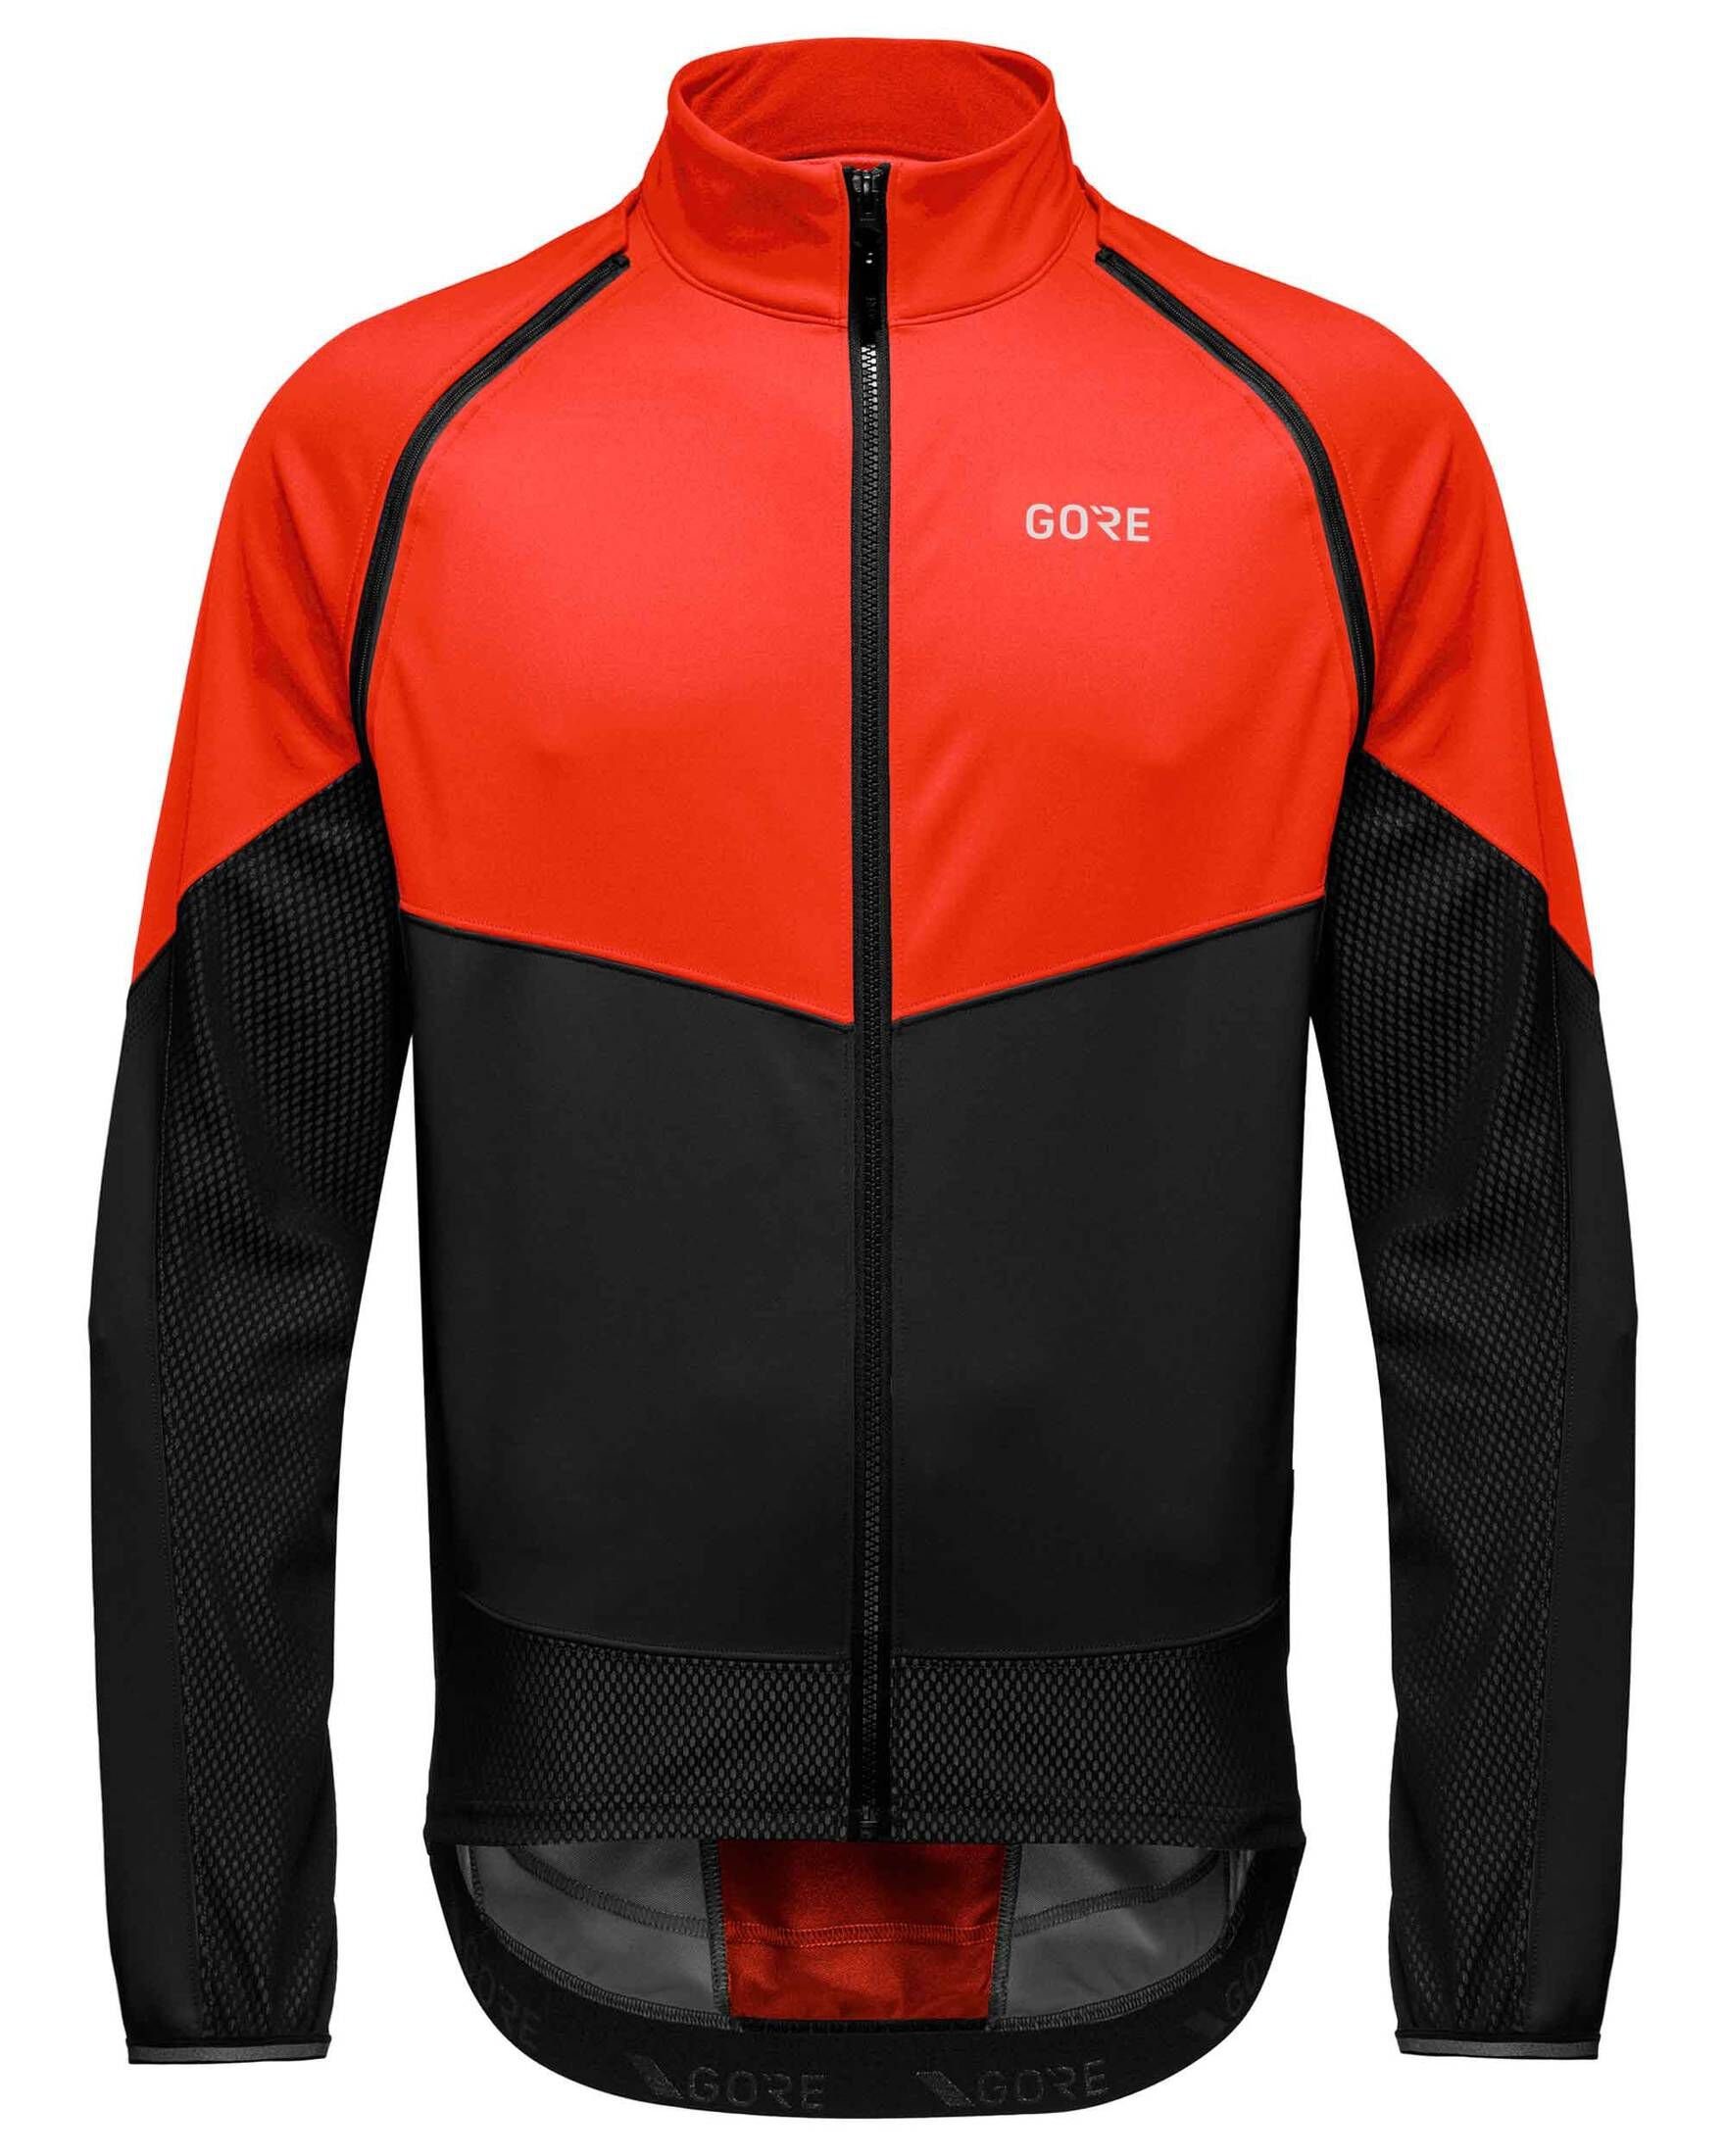 GTX I Fahrradjacke GORE® PHANTOM Fahrradjacke Herren (709) Wear rot/schwarz